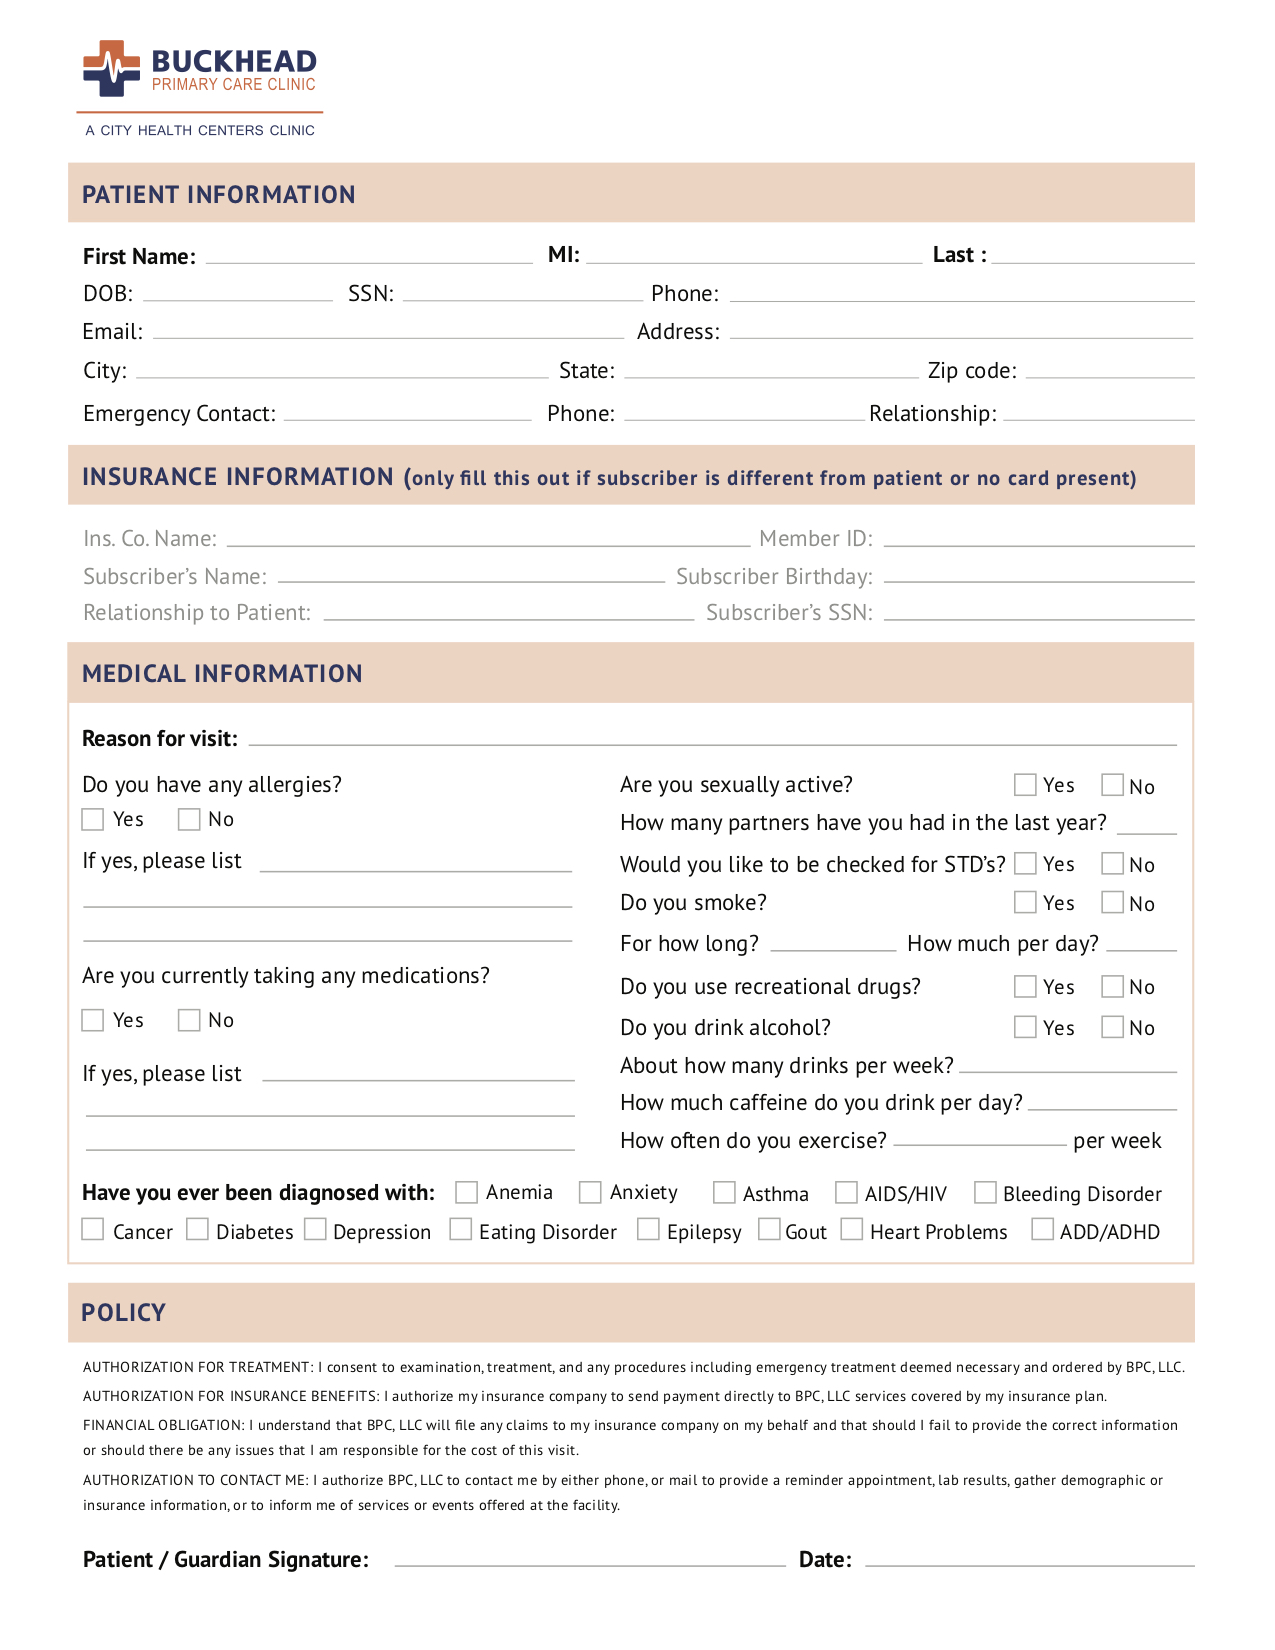 Buckhead Primary Care New Patient Form